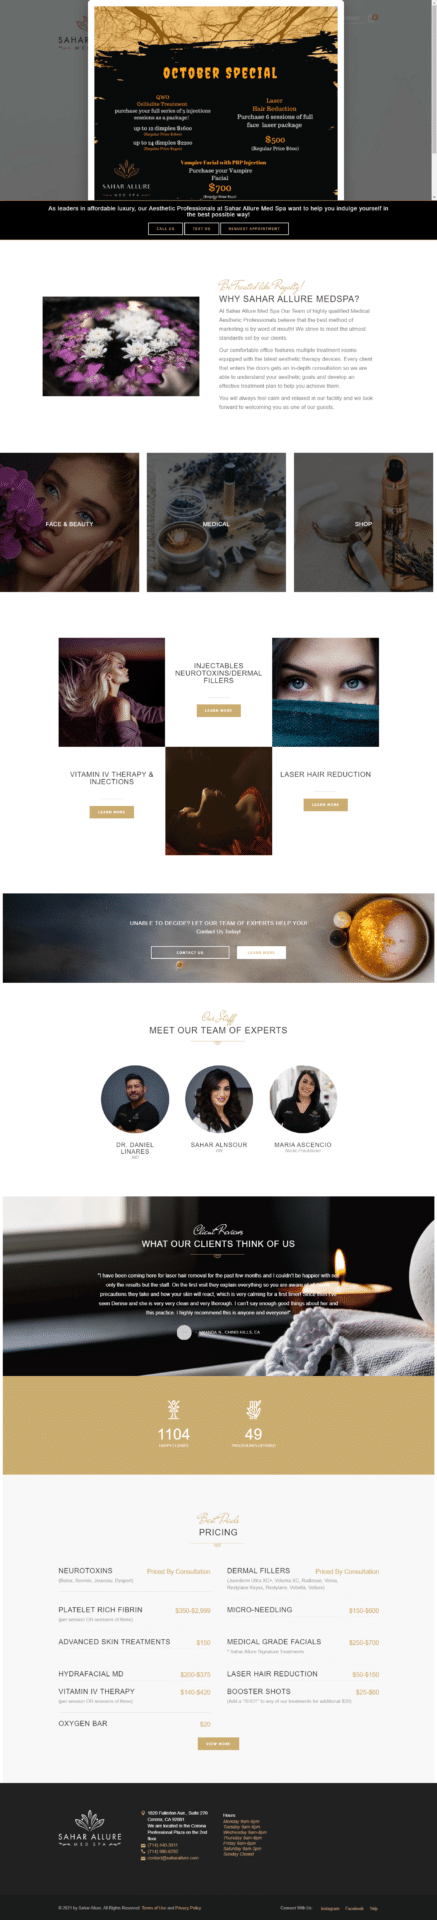 Best Eyelashes Business website design in 2022